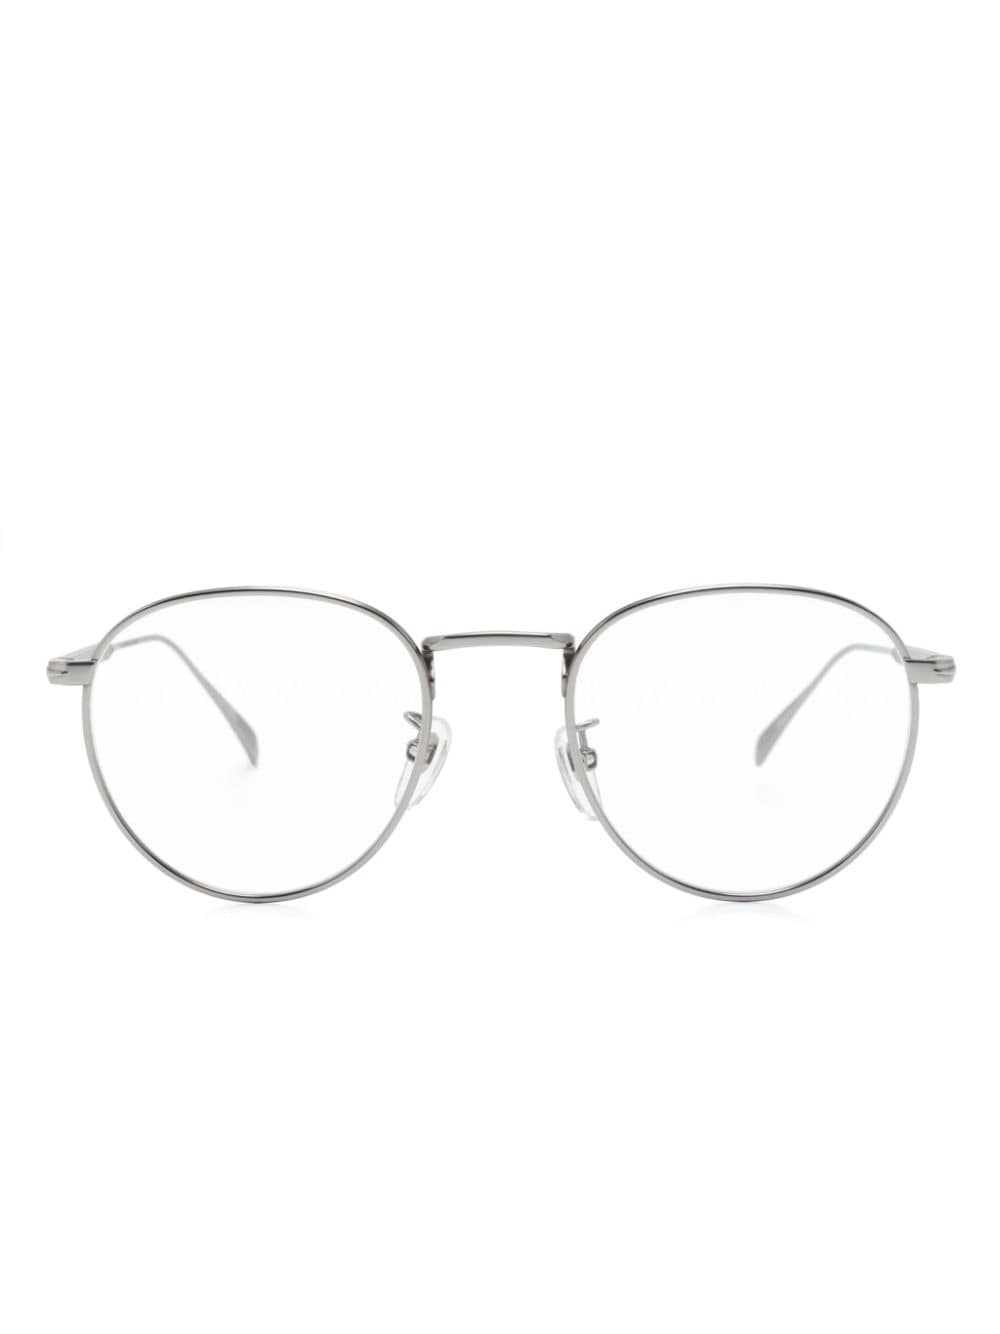 Eyewear by David Beckham round-frame glasses - Silver von Eyewear by David Beckham